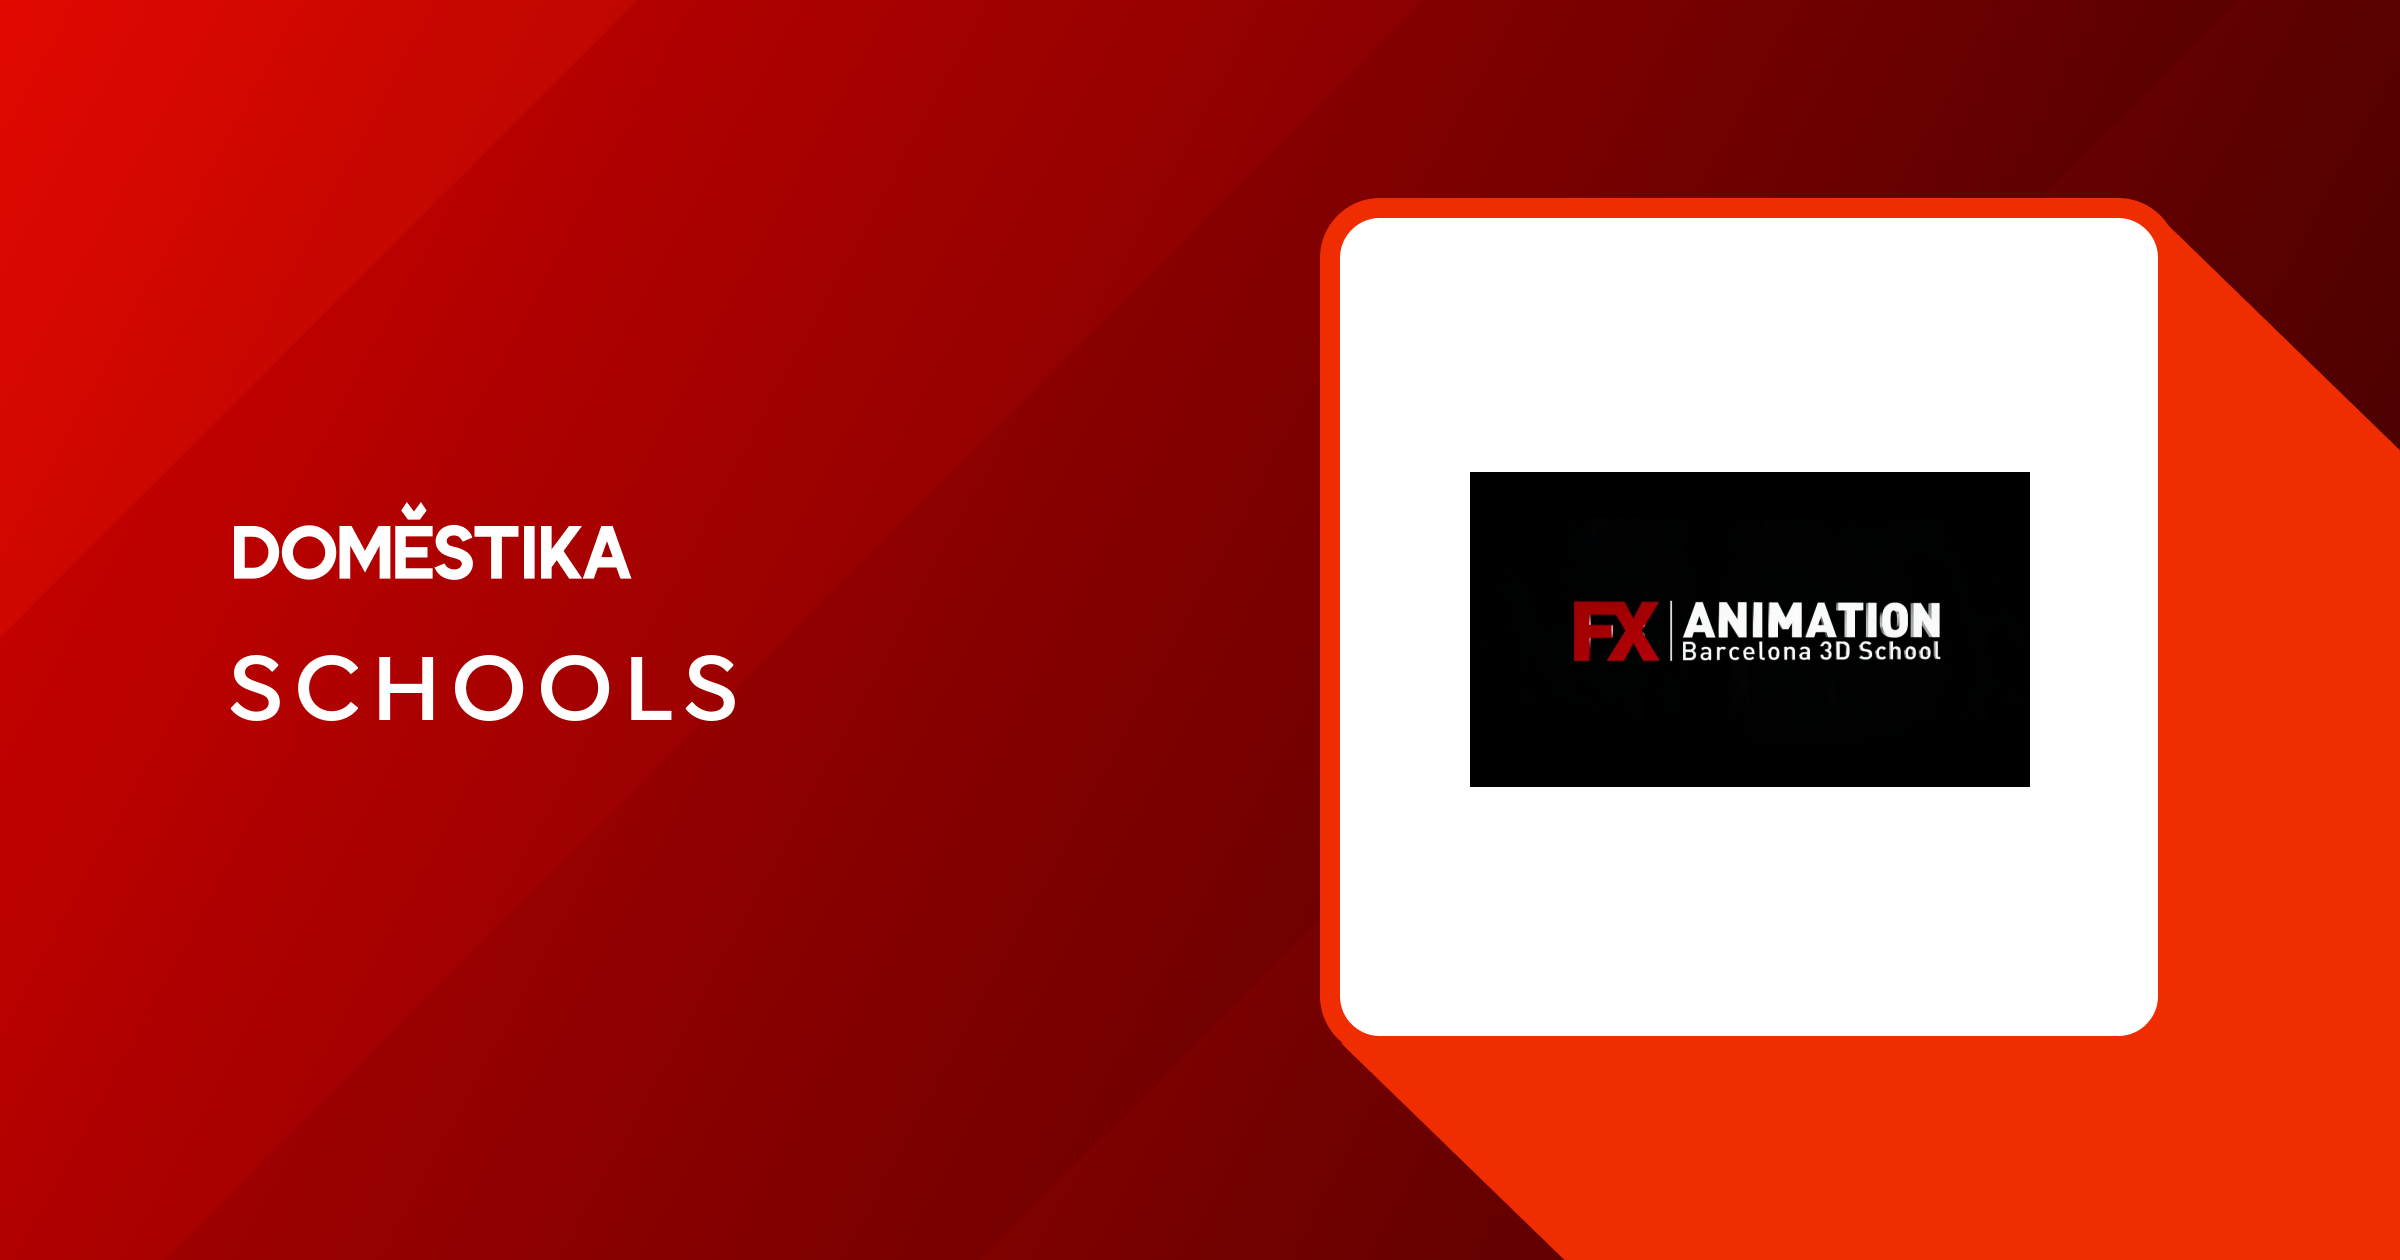 FX ANIMATION Barcelona 3D & Film School | Domestika